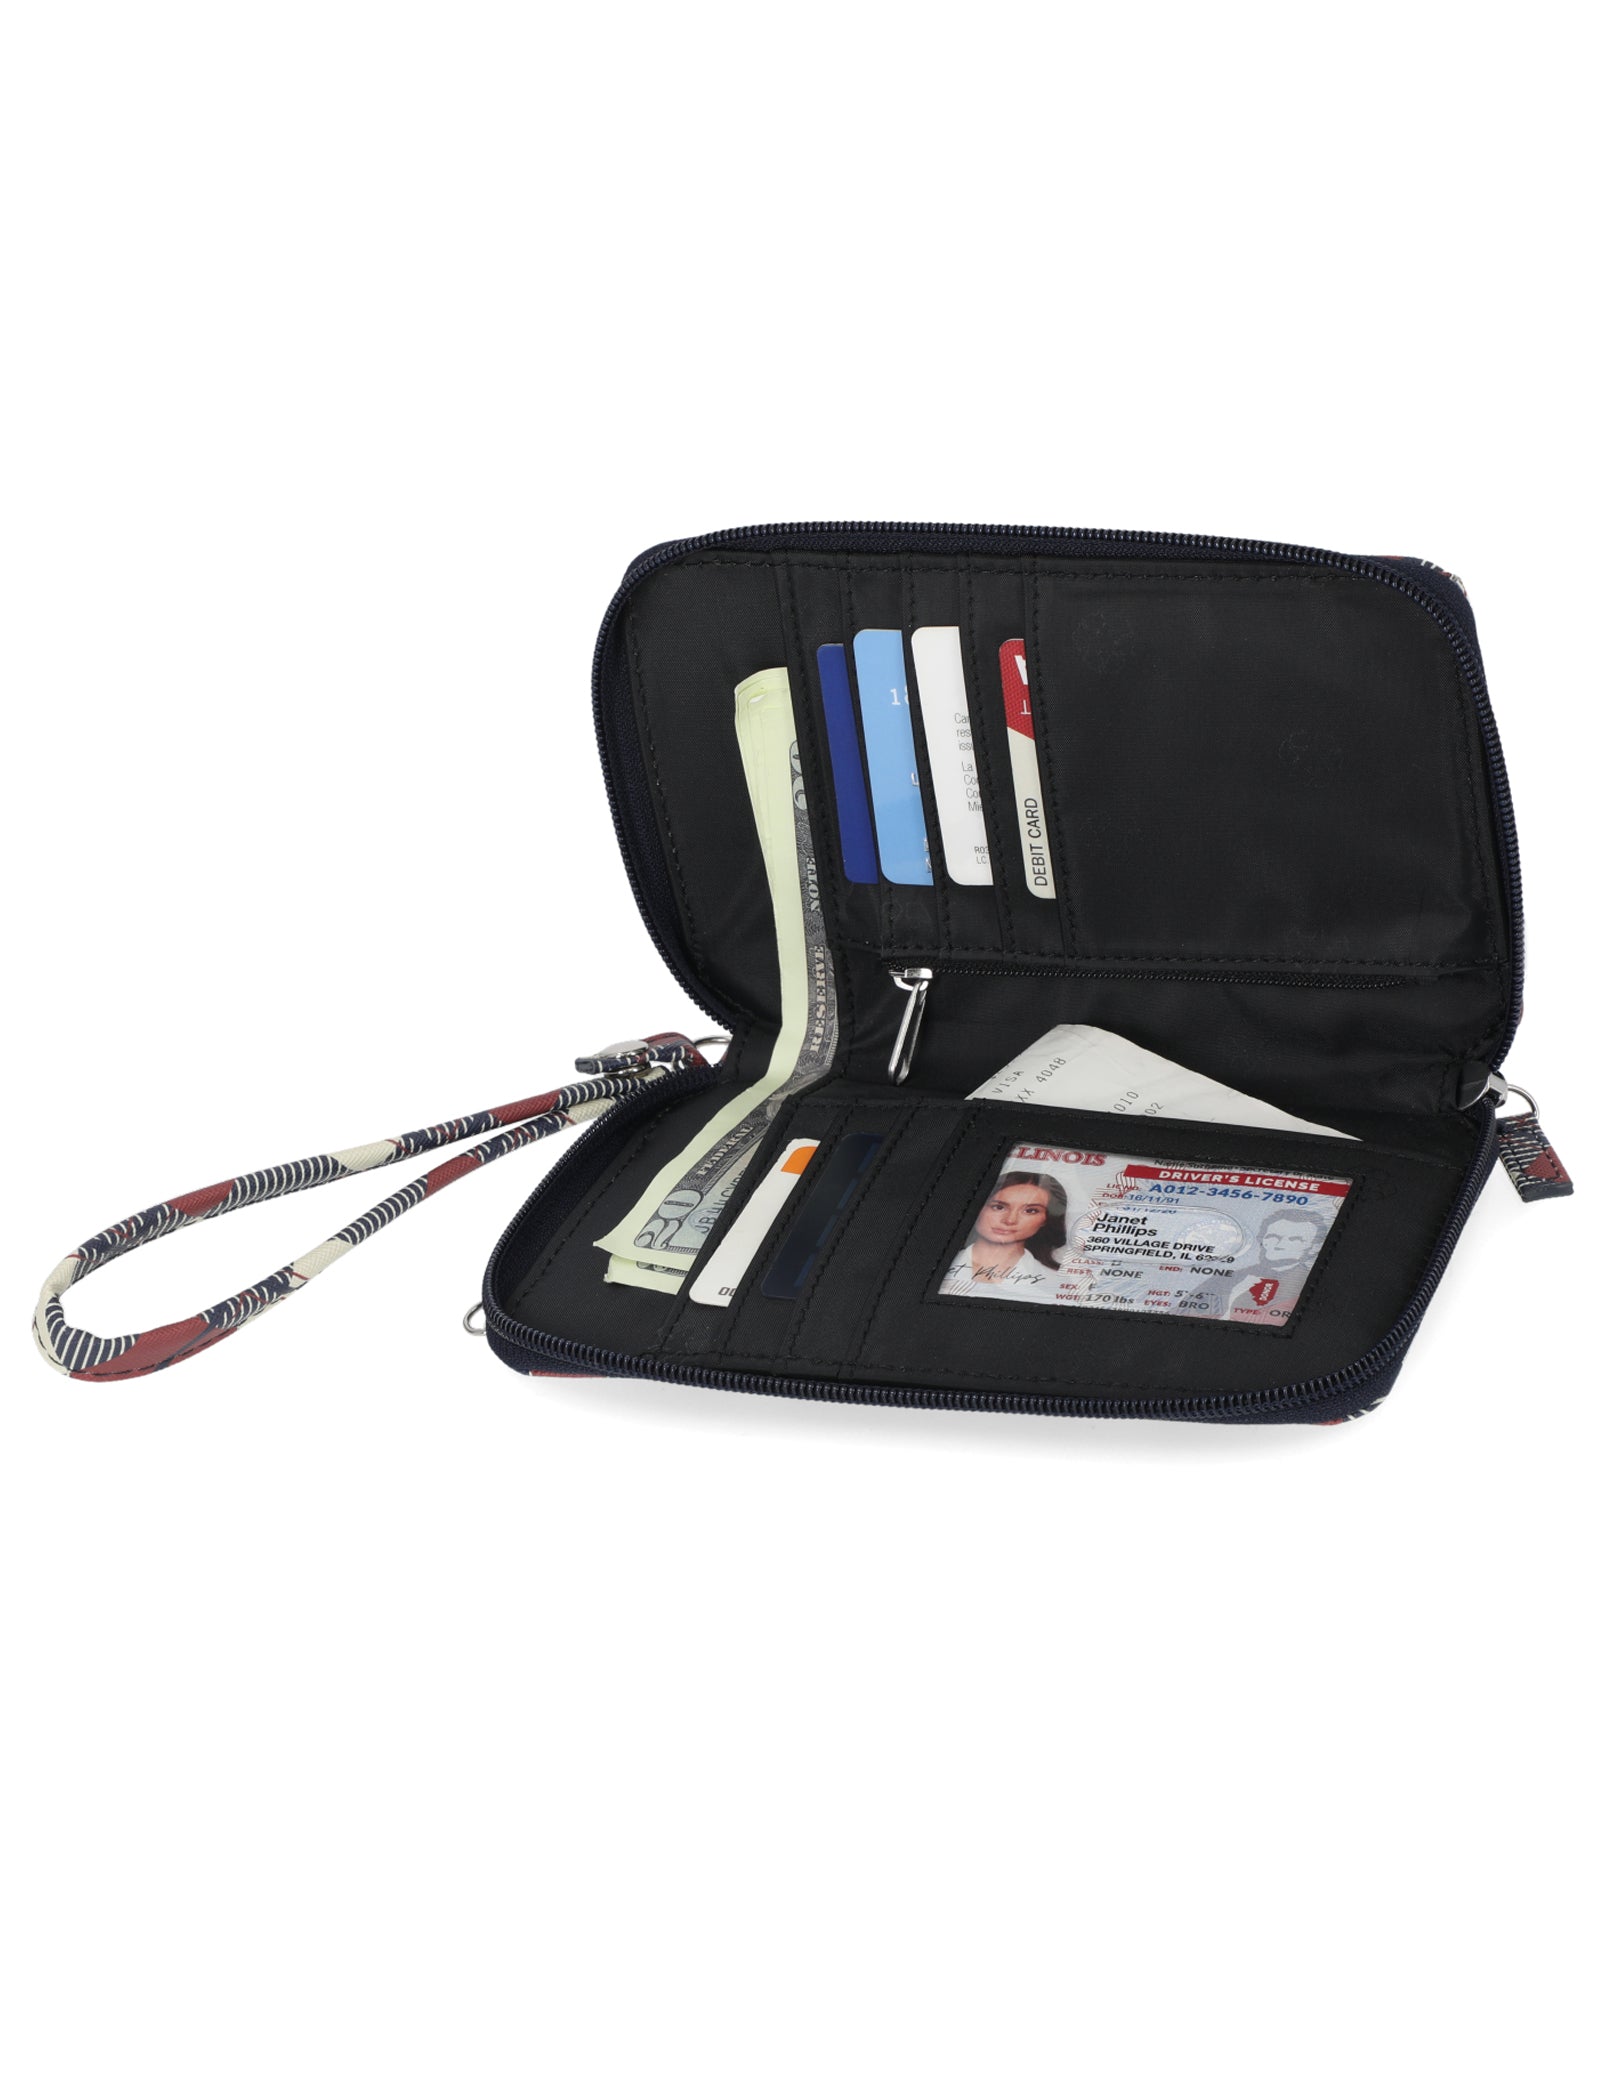 Jacqui Crossbody Cell Phone Wallet - Mundi Wallets - Women's Wallet - Wristlet - Crossbody Bag - Key Chain - Piccadilly Plaid- RFID protected Organizer Wallet